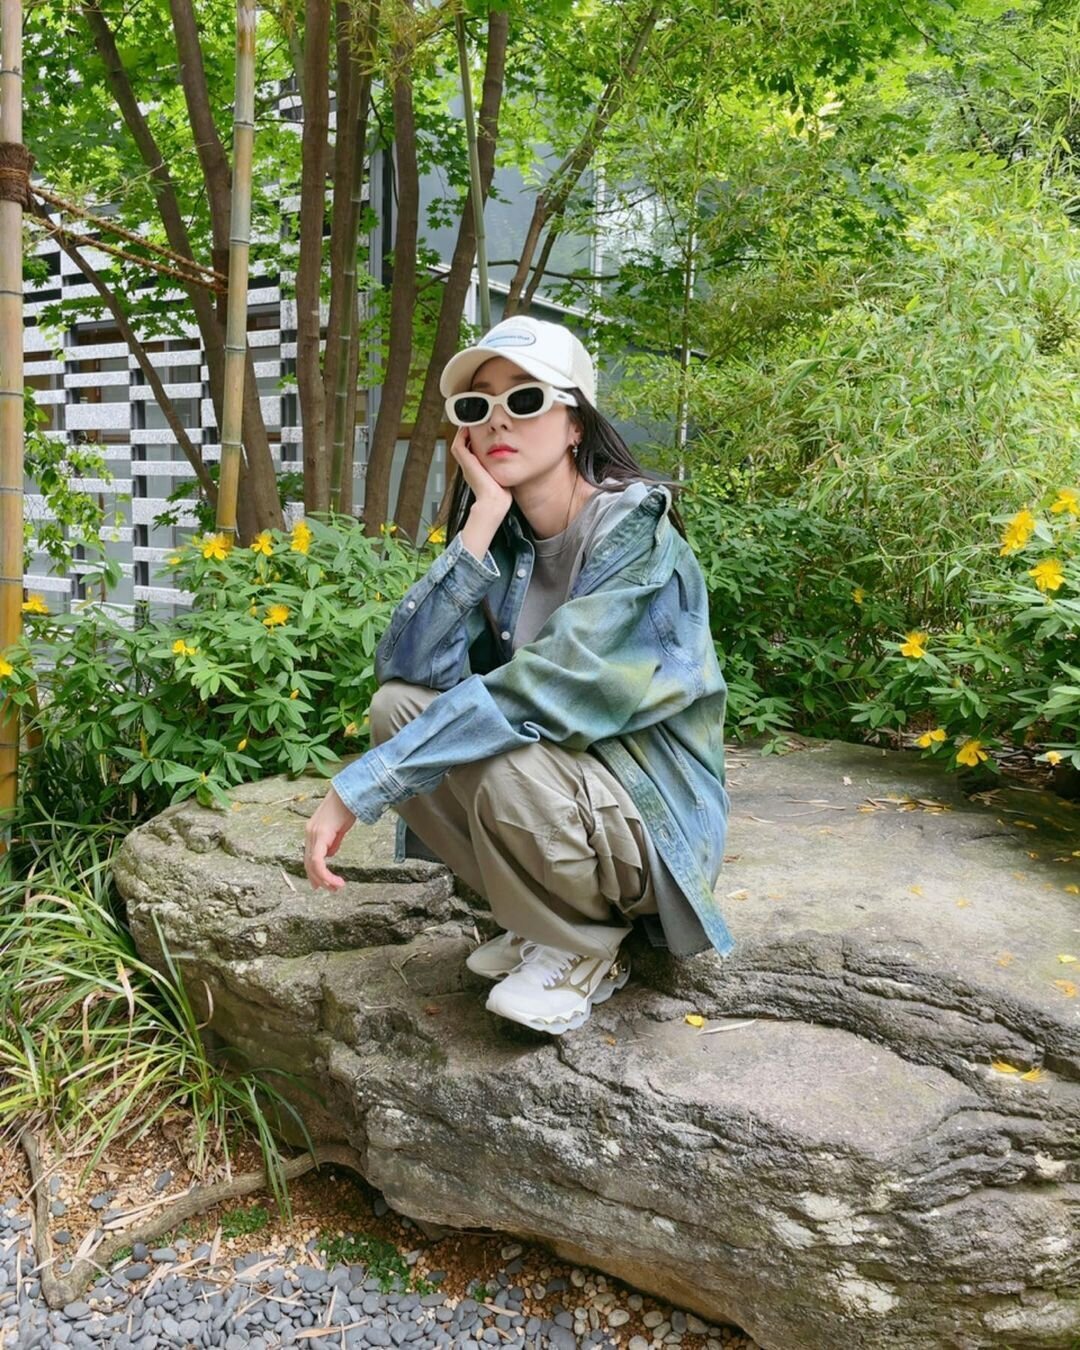 Dara Style on X: [SNS Update] 211225 - #DARA's Twitter post